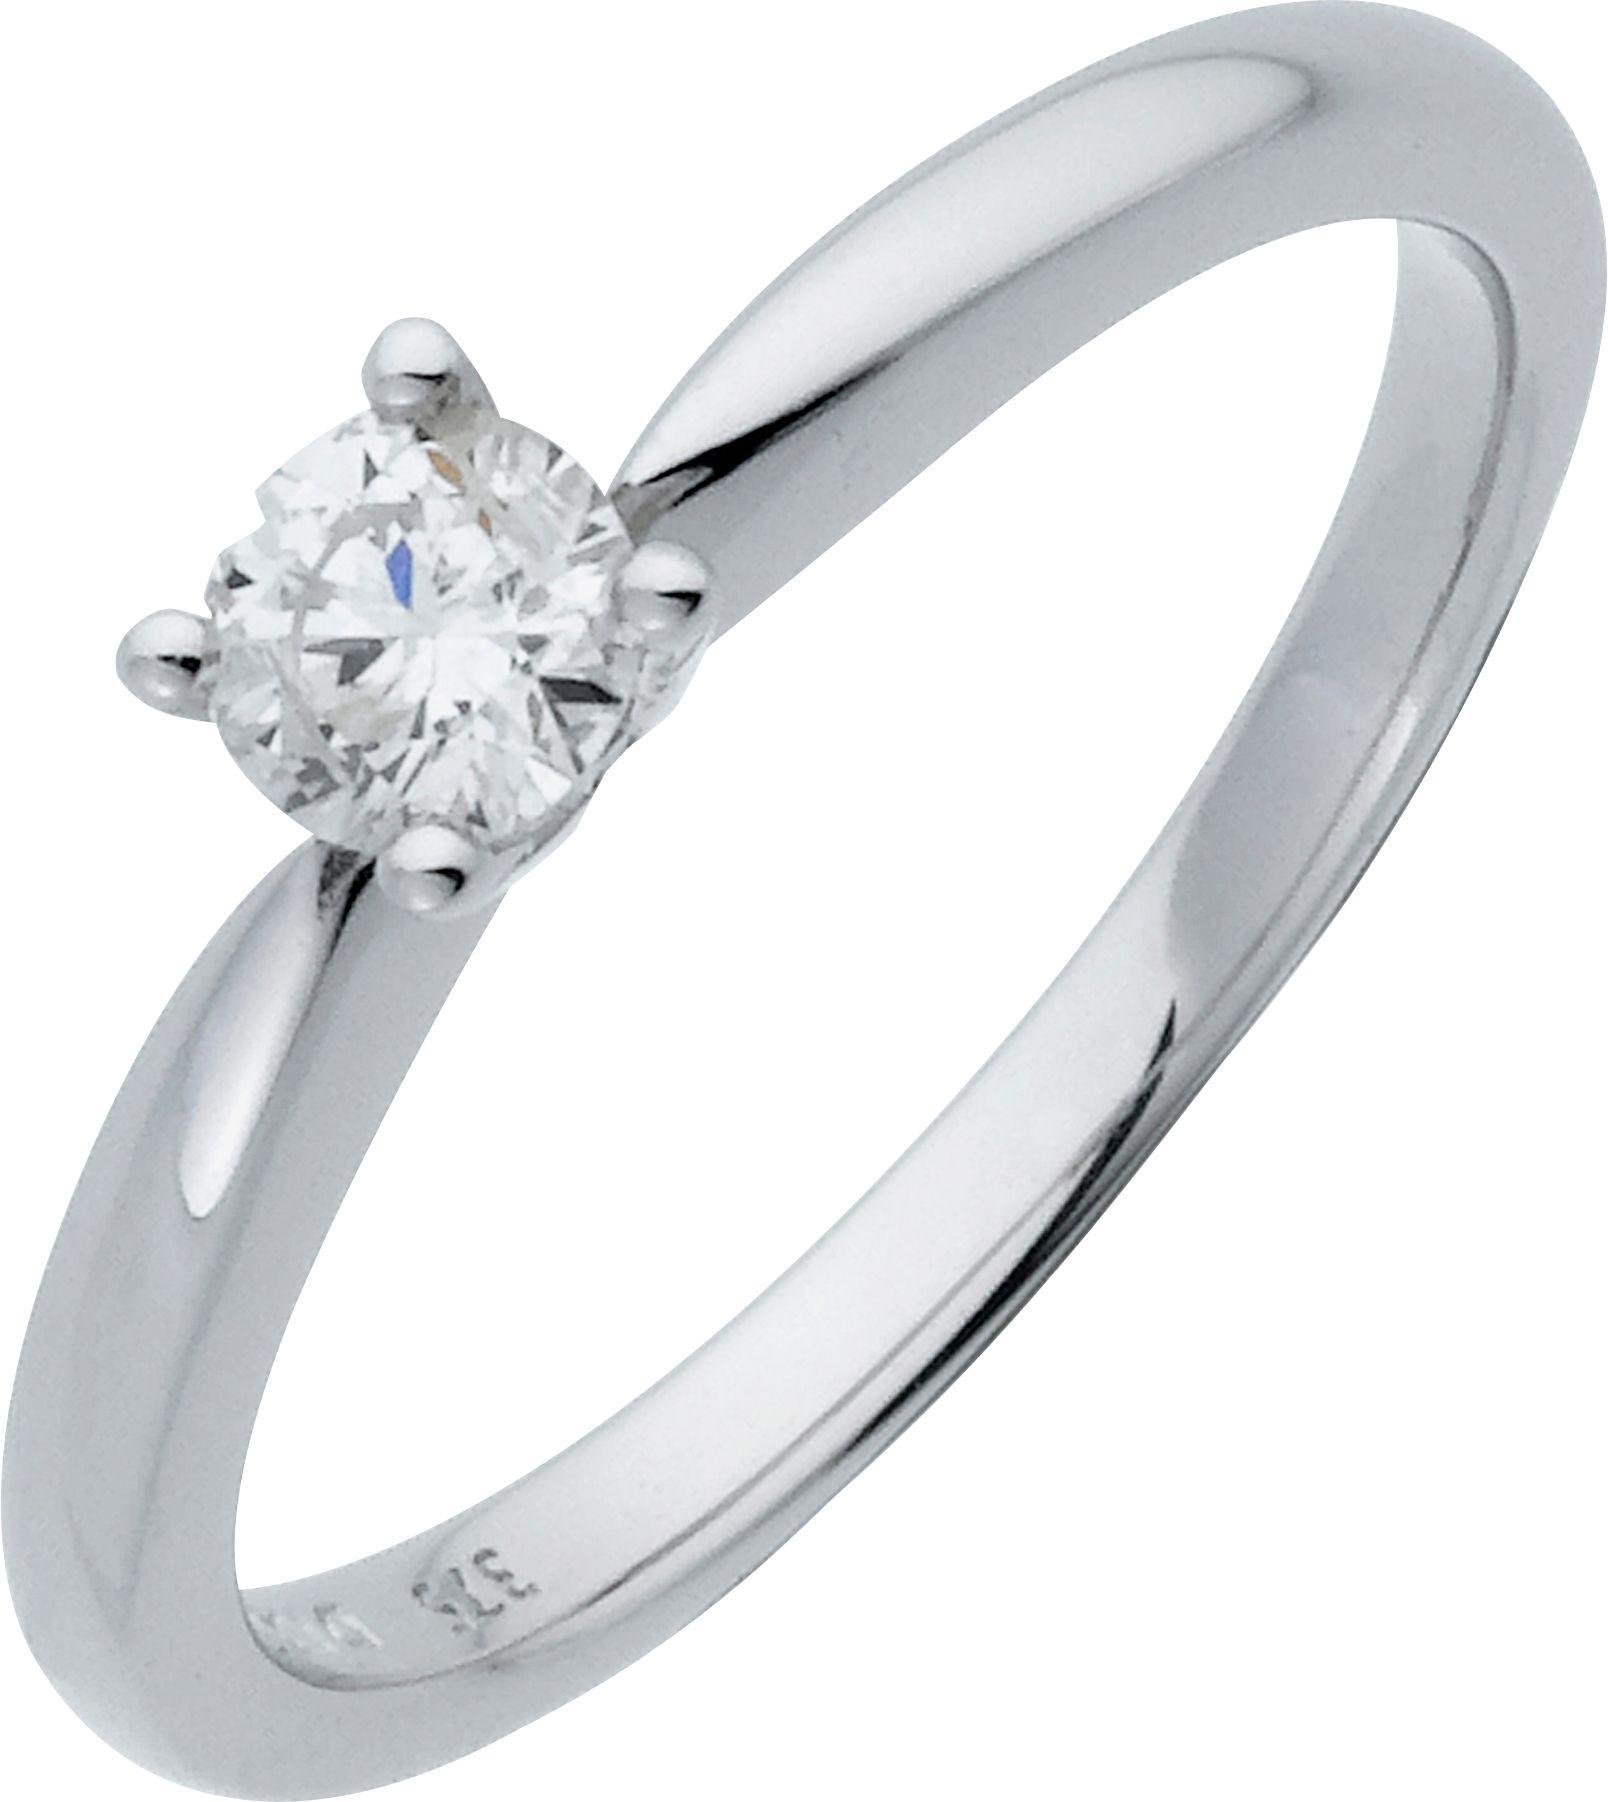 Buy Everlasting Love 9ct Gold 0.50ct Diamond Bridal Ring Set - S at ...